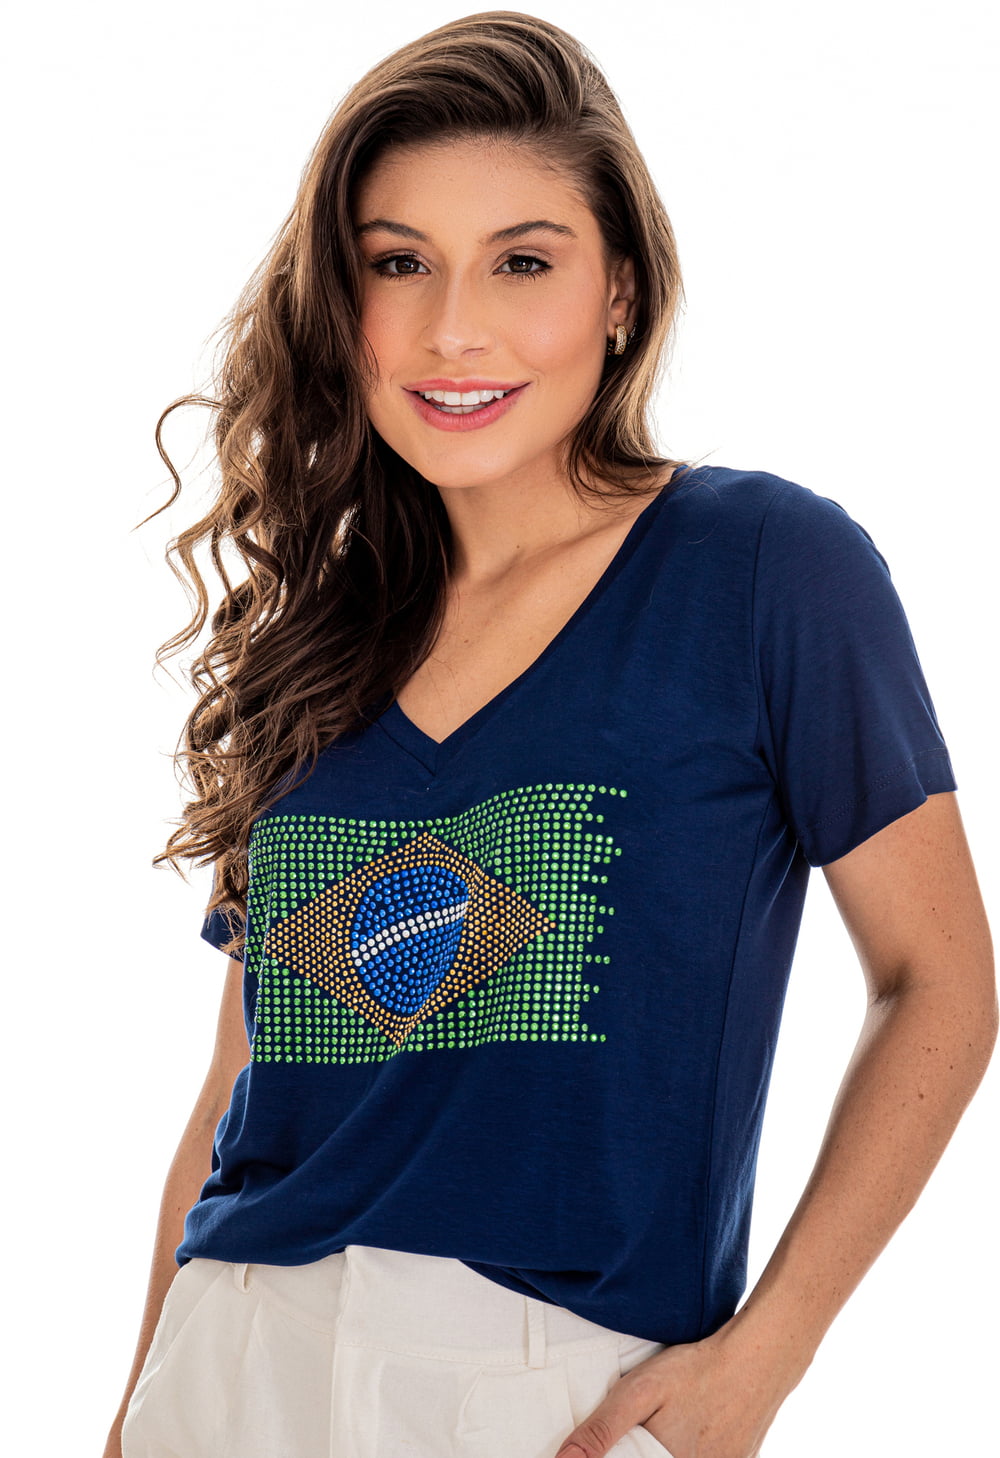 T-SHIRT BRASIL - Elegance camisas